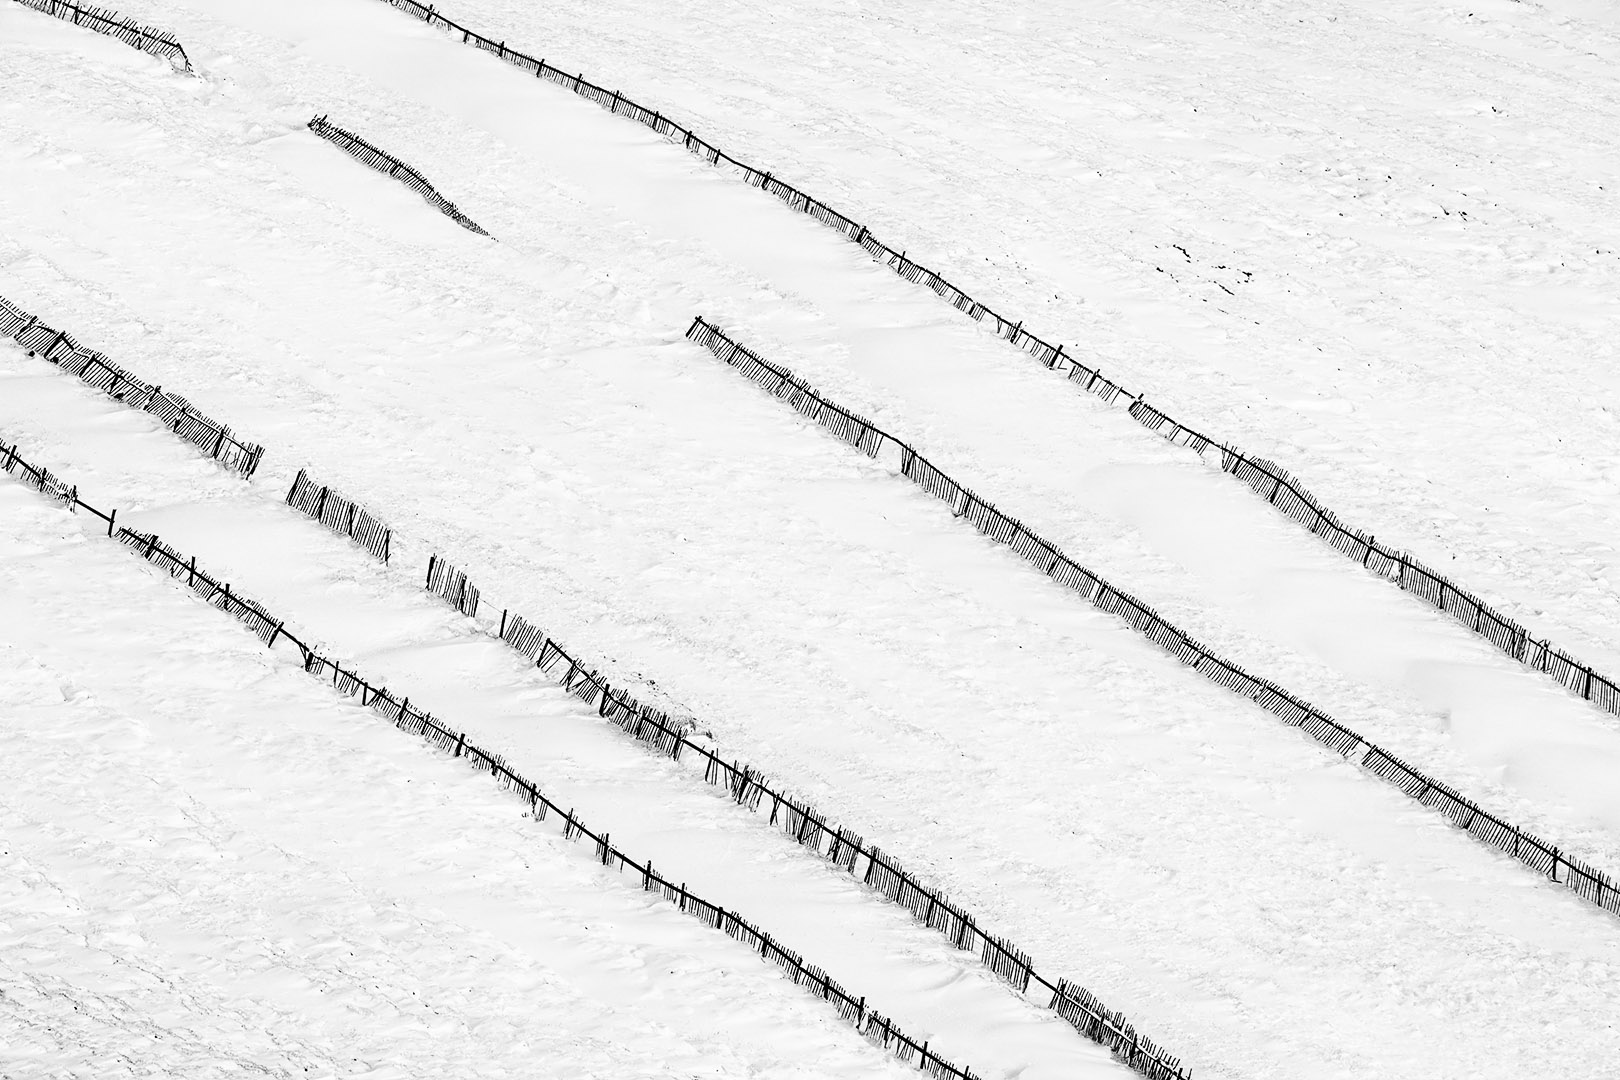 Snow Fence I